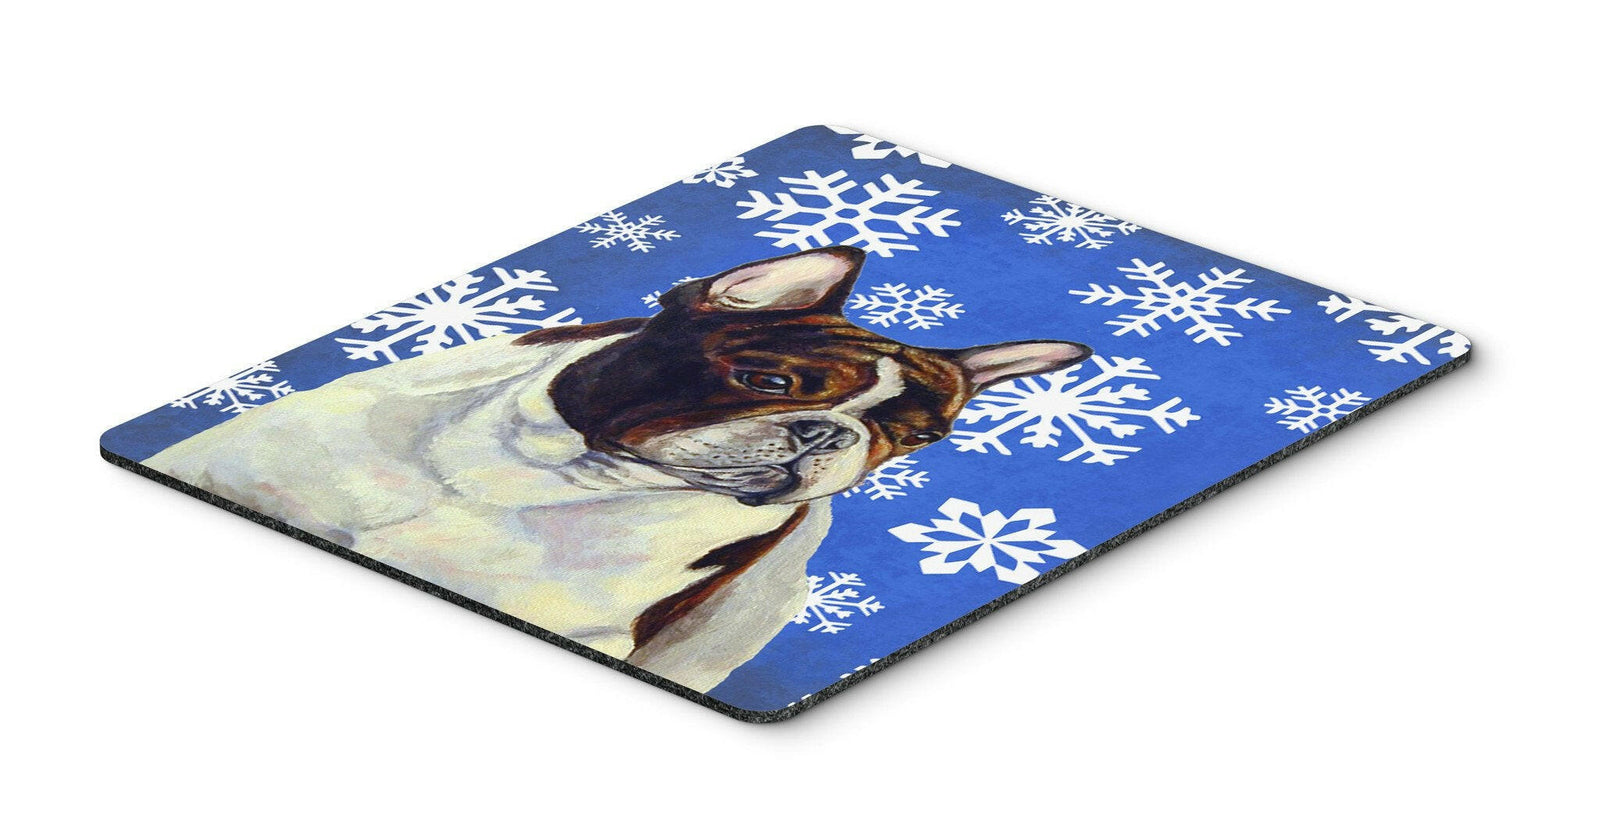 French Bulldog Winter Snowflakes Holiday Mouse Pad, Hot Pad or Trivet by Caroline's Treasures